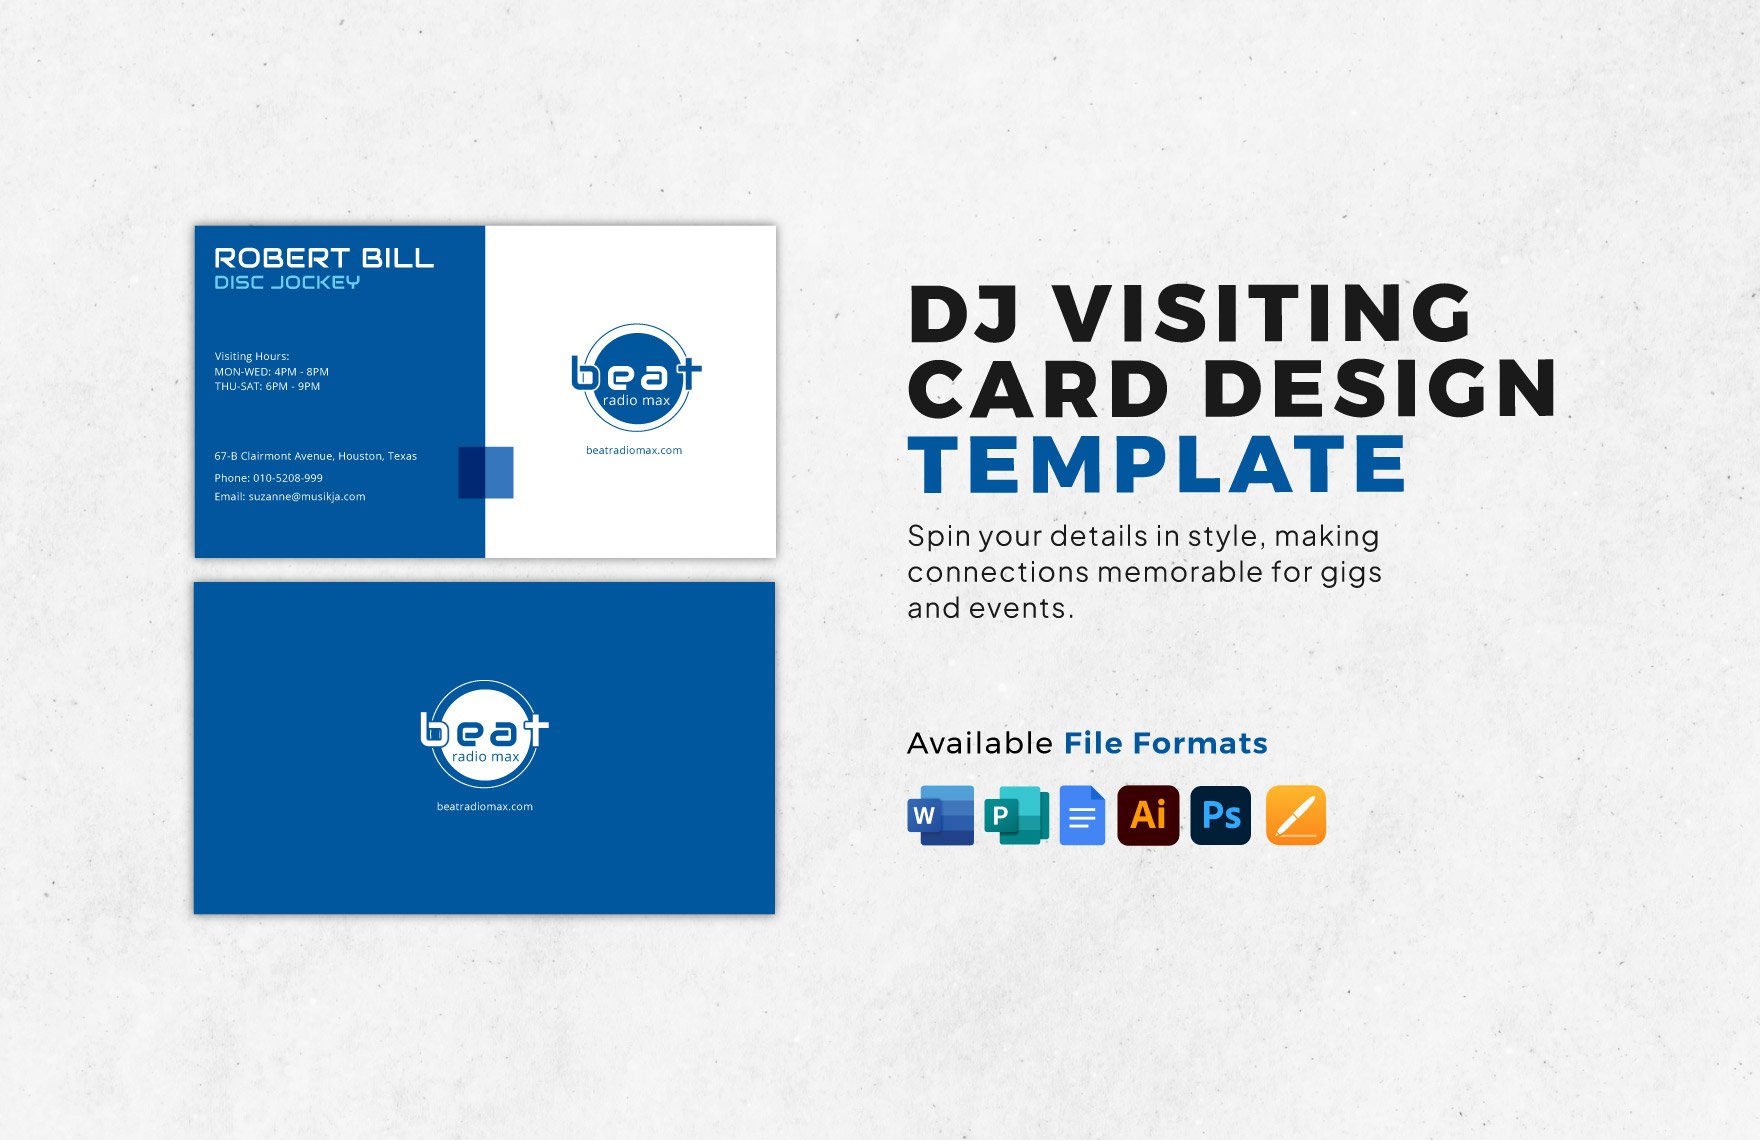 Dj Visiting Card Design Template in Word, Google Docs, Illustrator, PSD, Apple Pages, Publisher